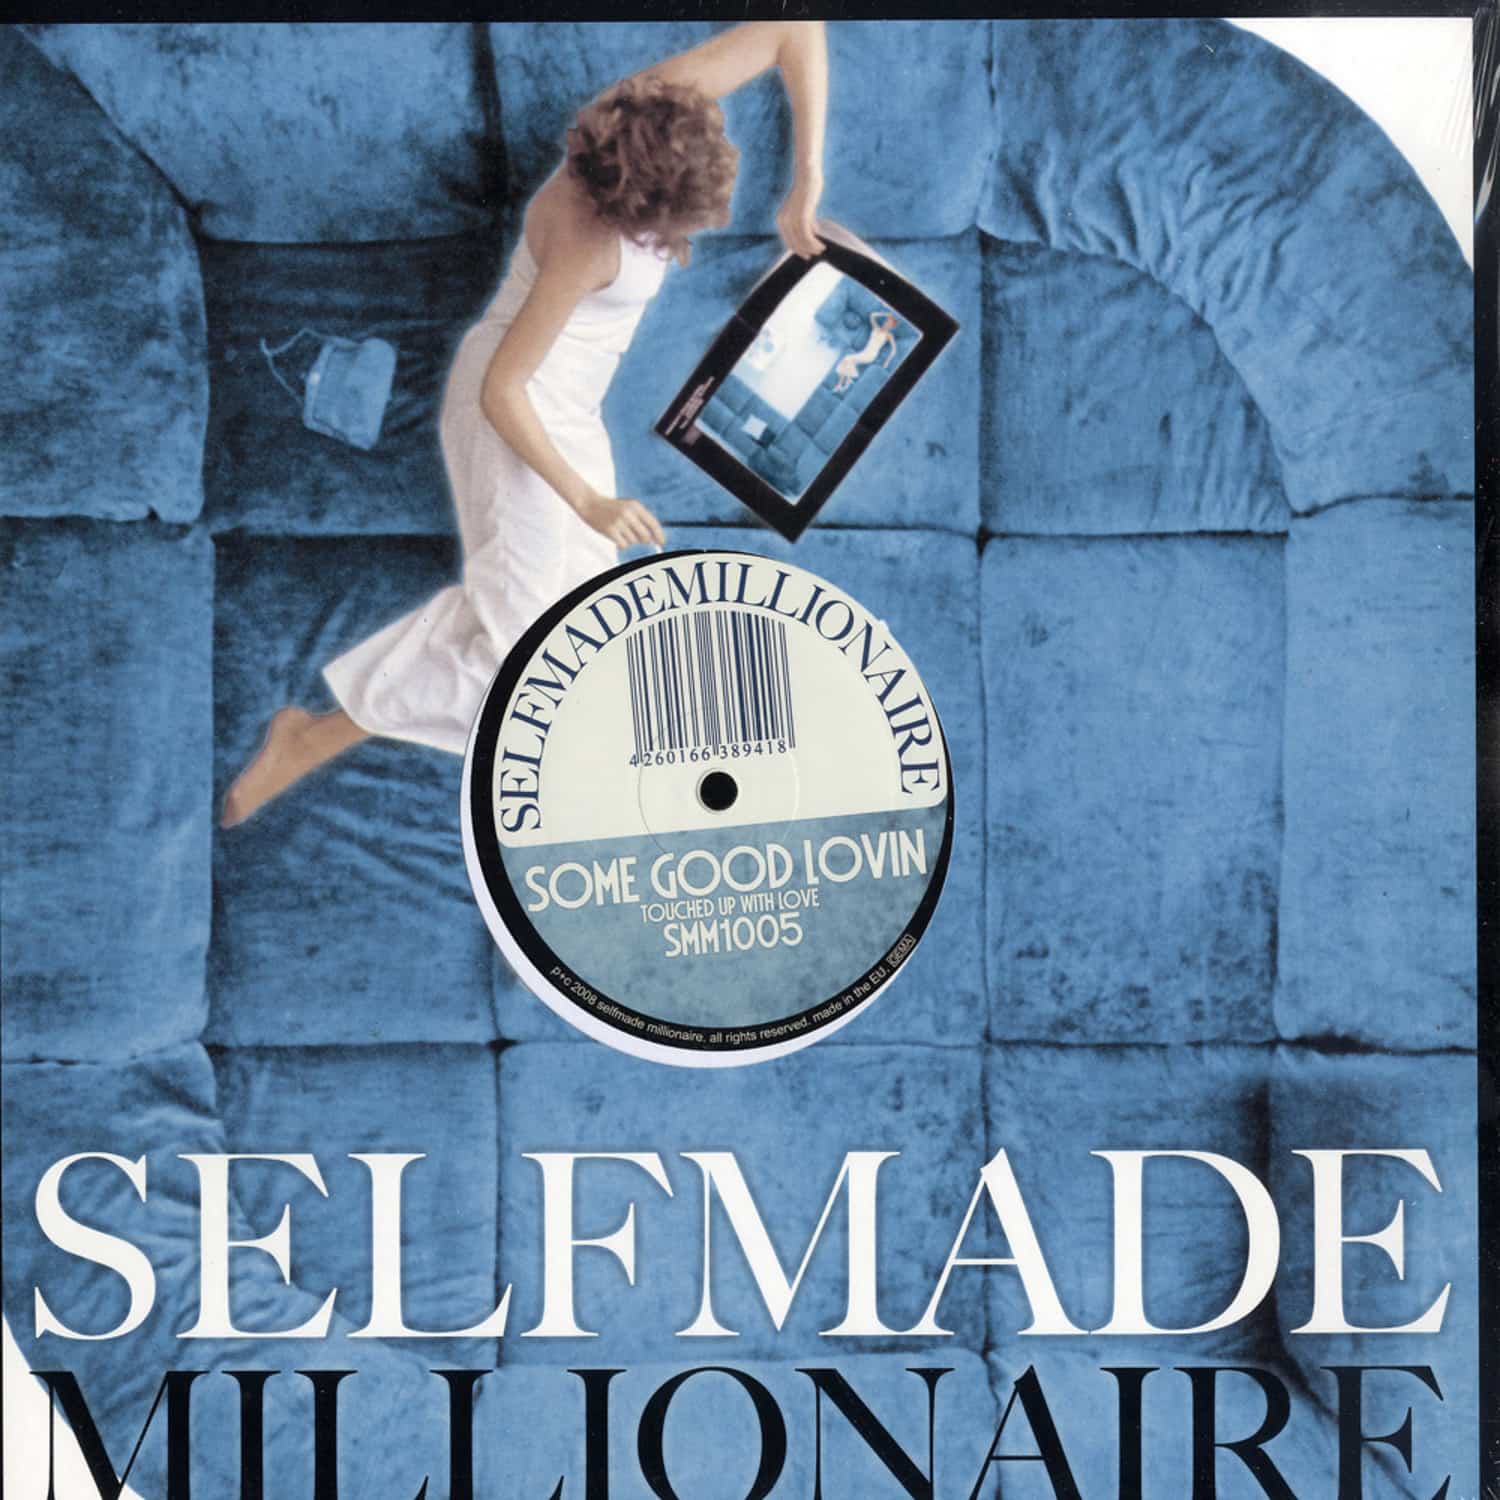 Selfmade Millionaire - SOME GOOD LOVIN